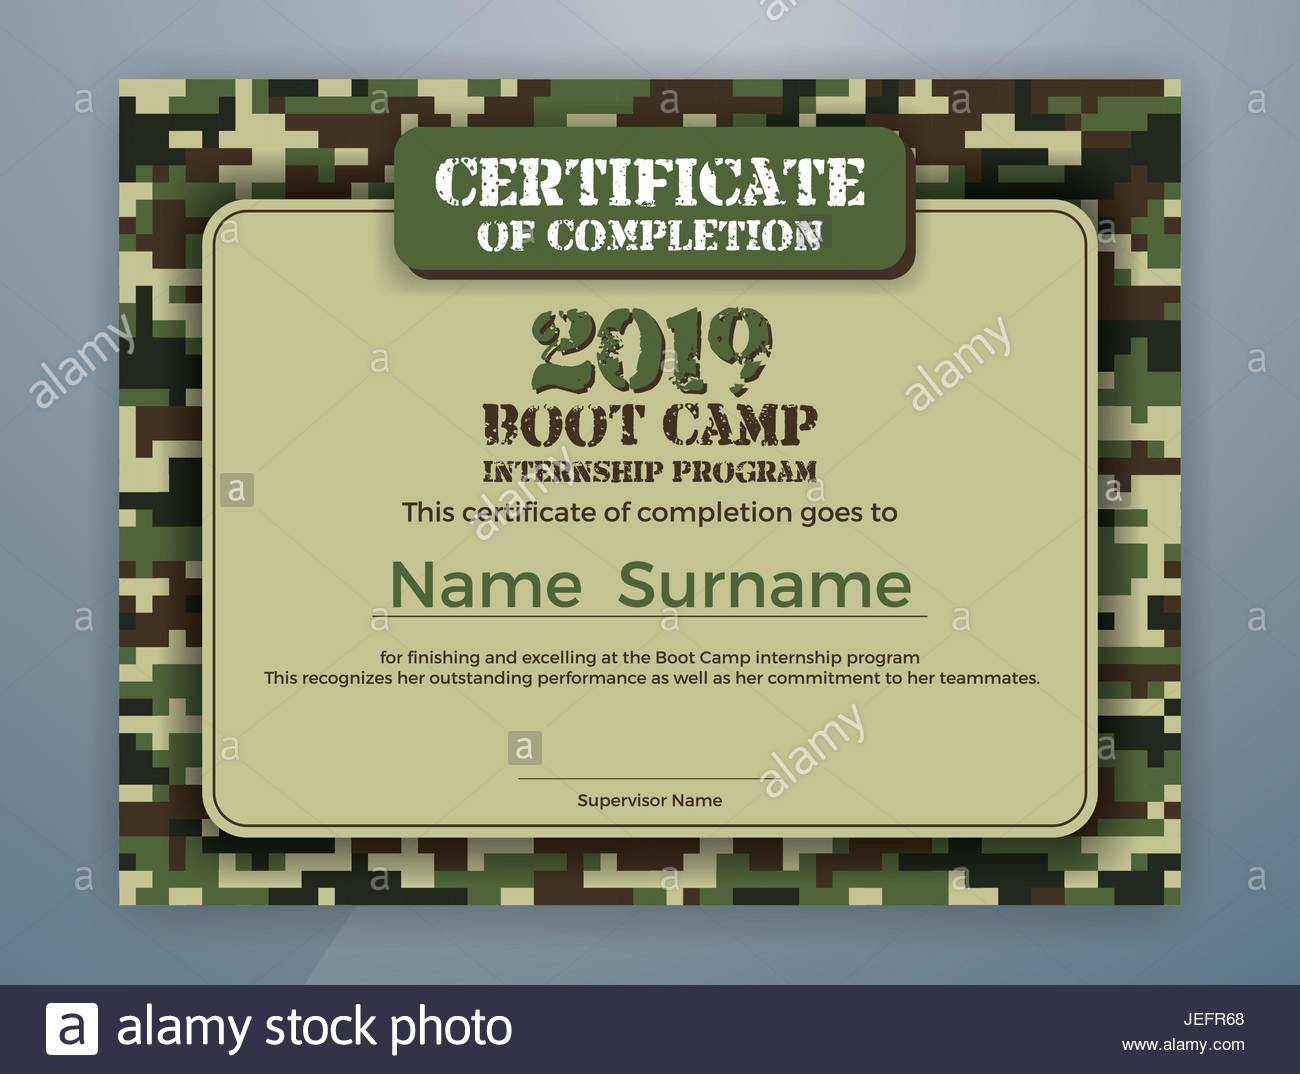 Boot Camp Internship Program Certificate Template Design Throughout Boot Camp Certificate Template